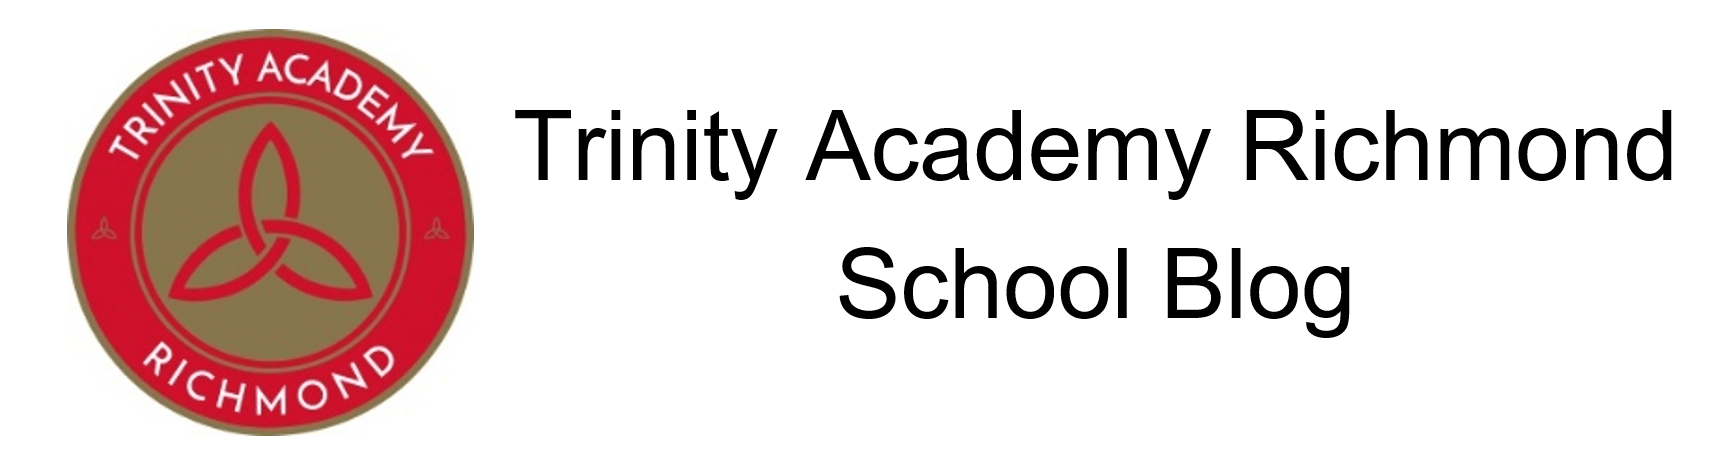 Trinity Academy Richmond School Blog